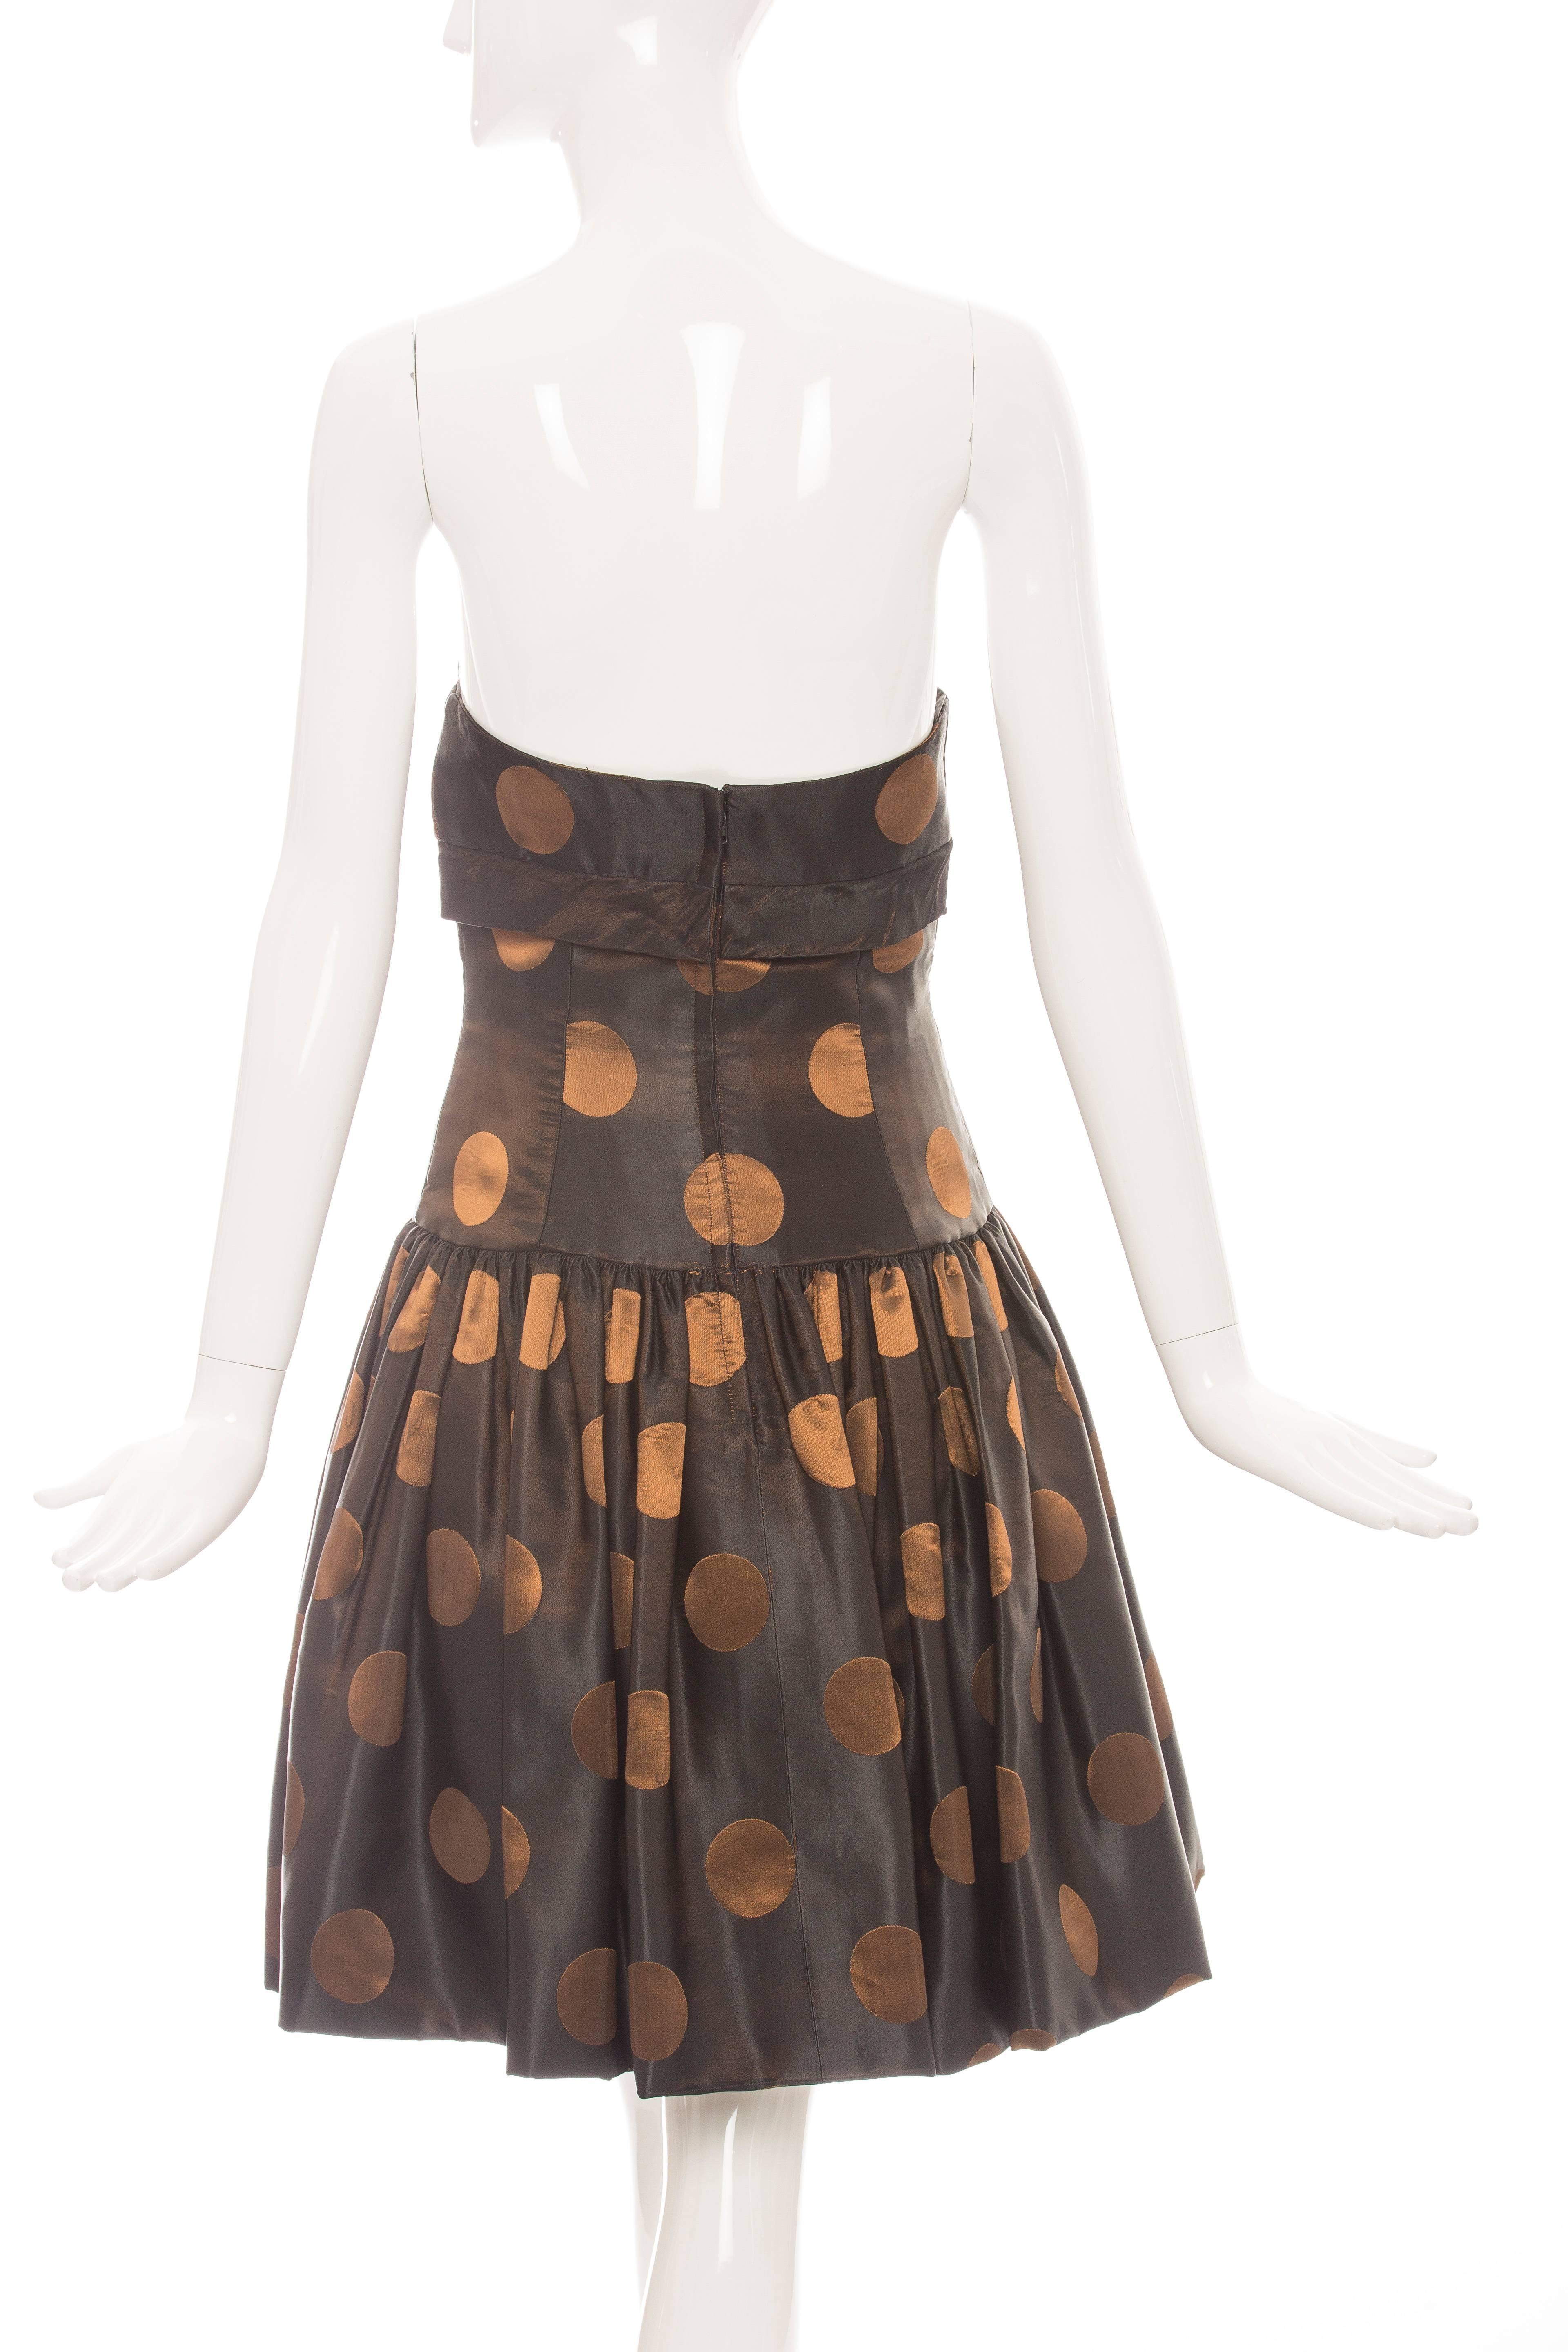 Women's Victor Costa Strapless Black Copper Polka Dot Taffeta Party Dress, Circa 1980's For Sale